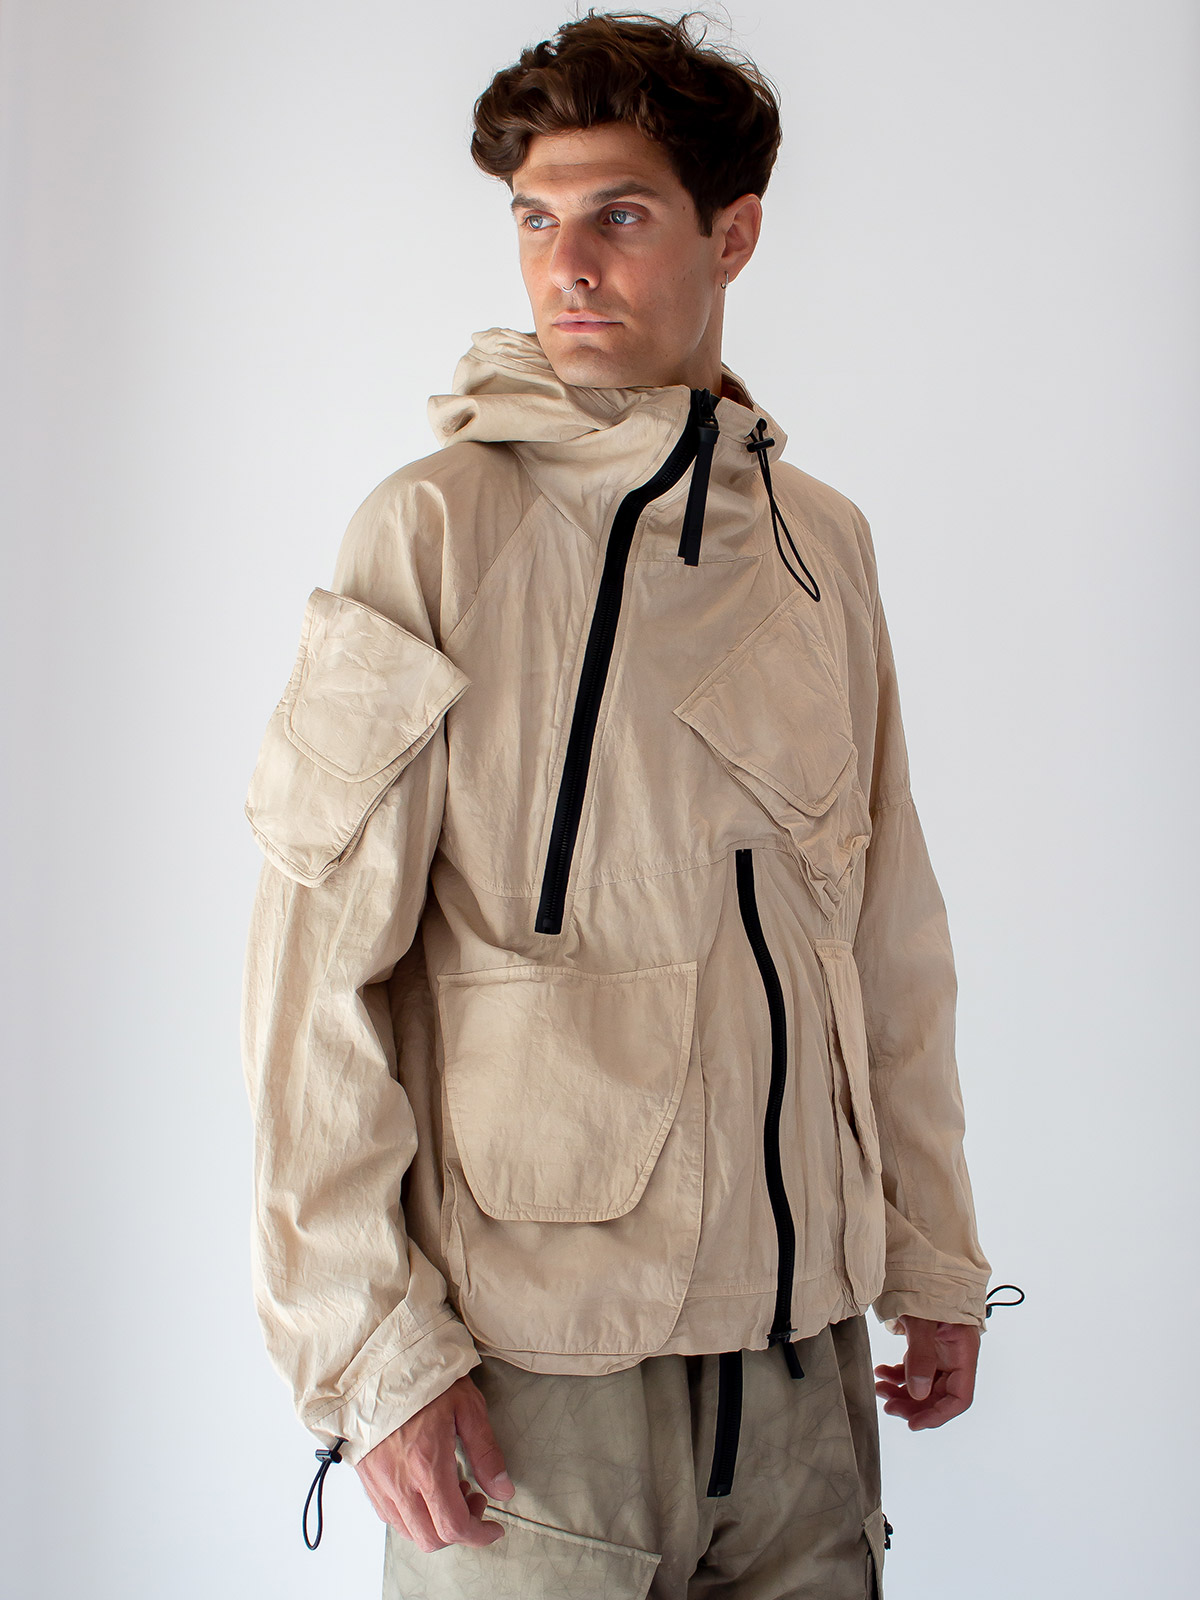 Gall | Off-center half-zip jacket with hood